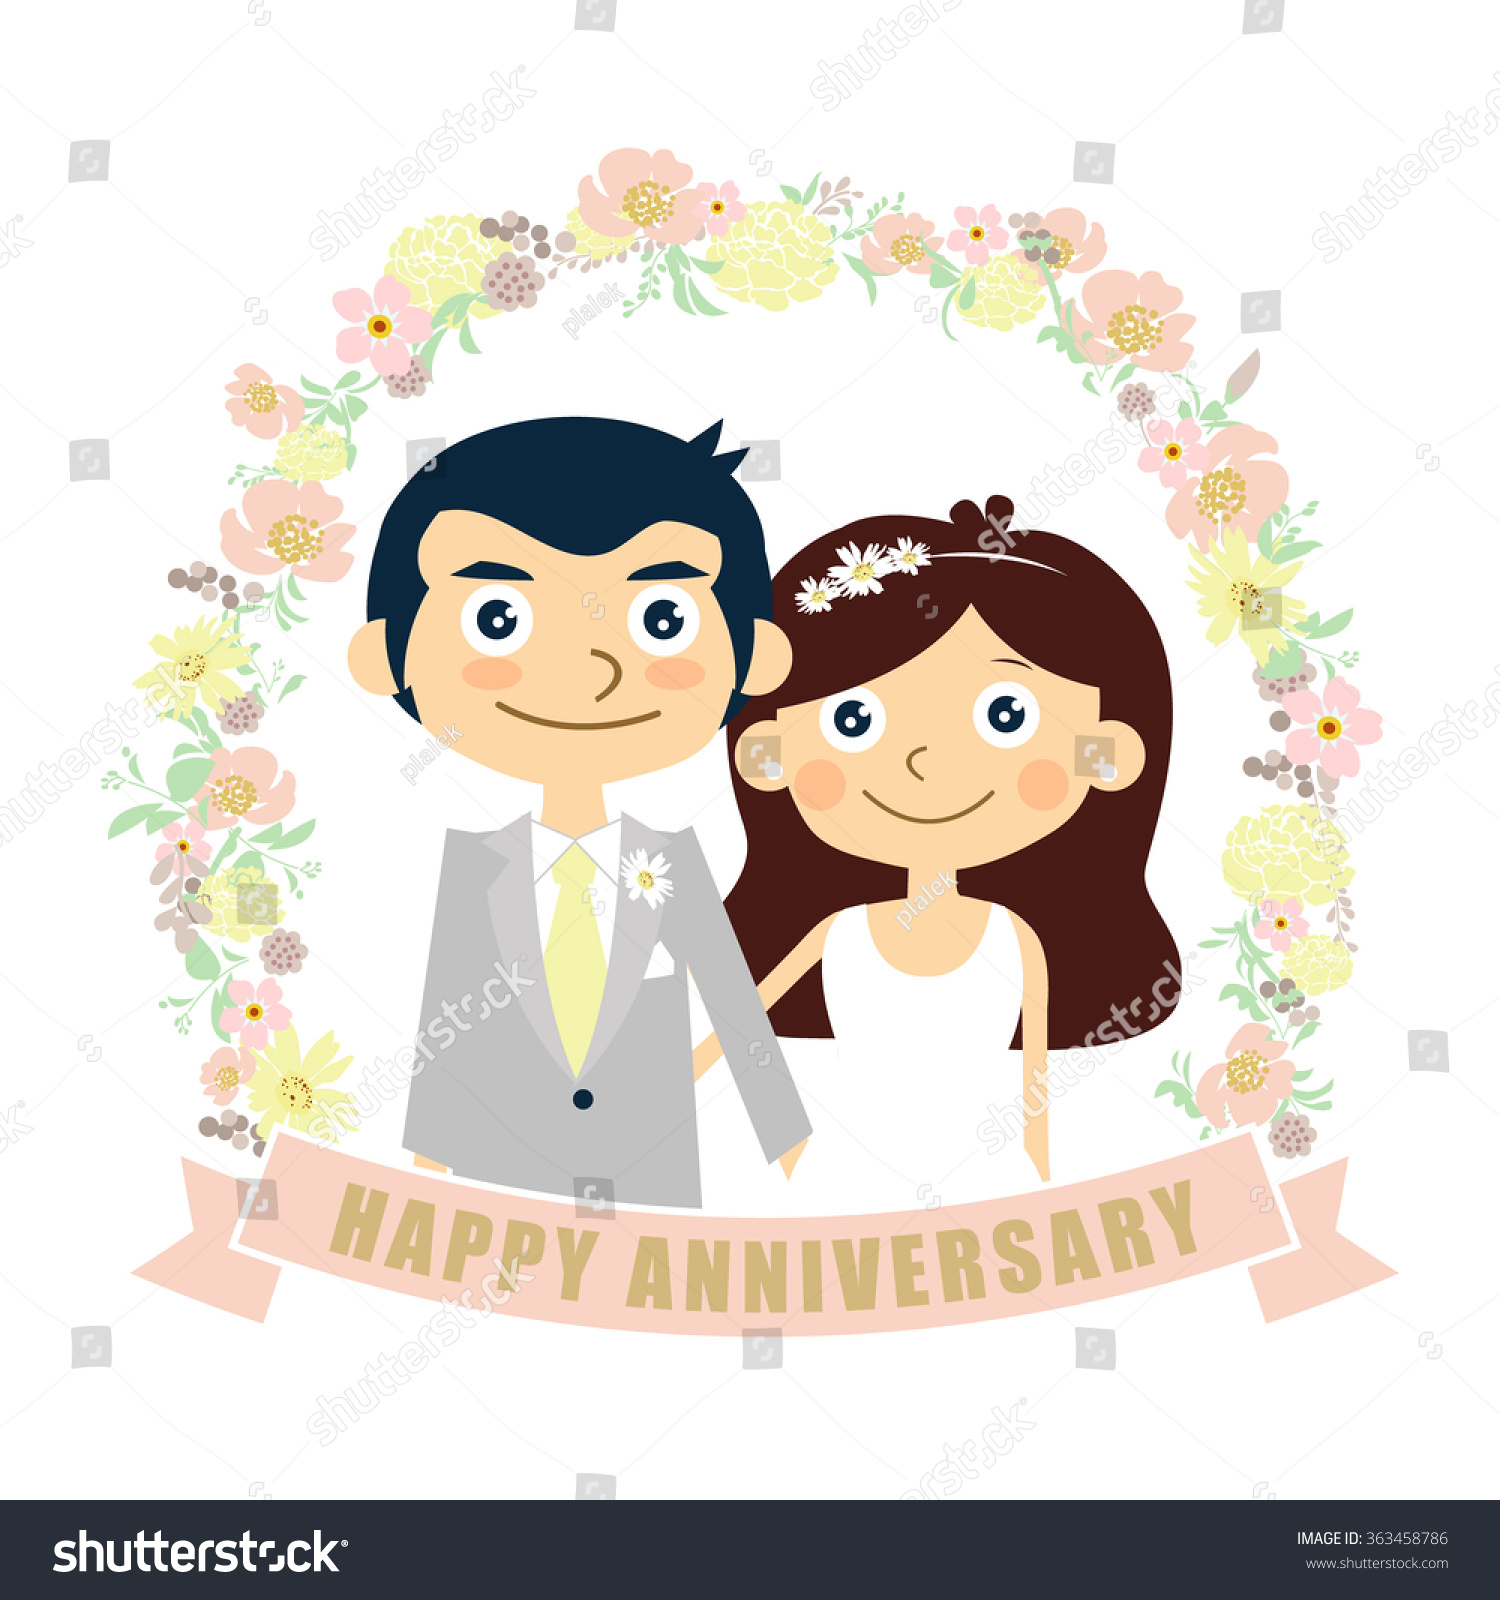 Happy Anniversary Card, Couple Wedding, Vector Illustration - 363458786